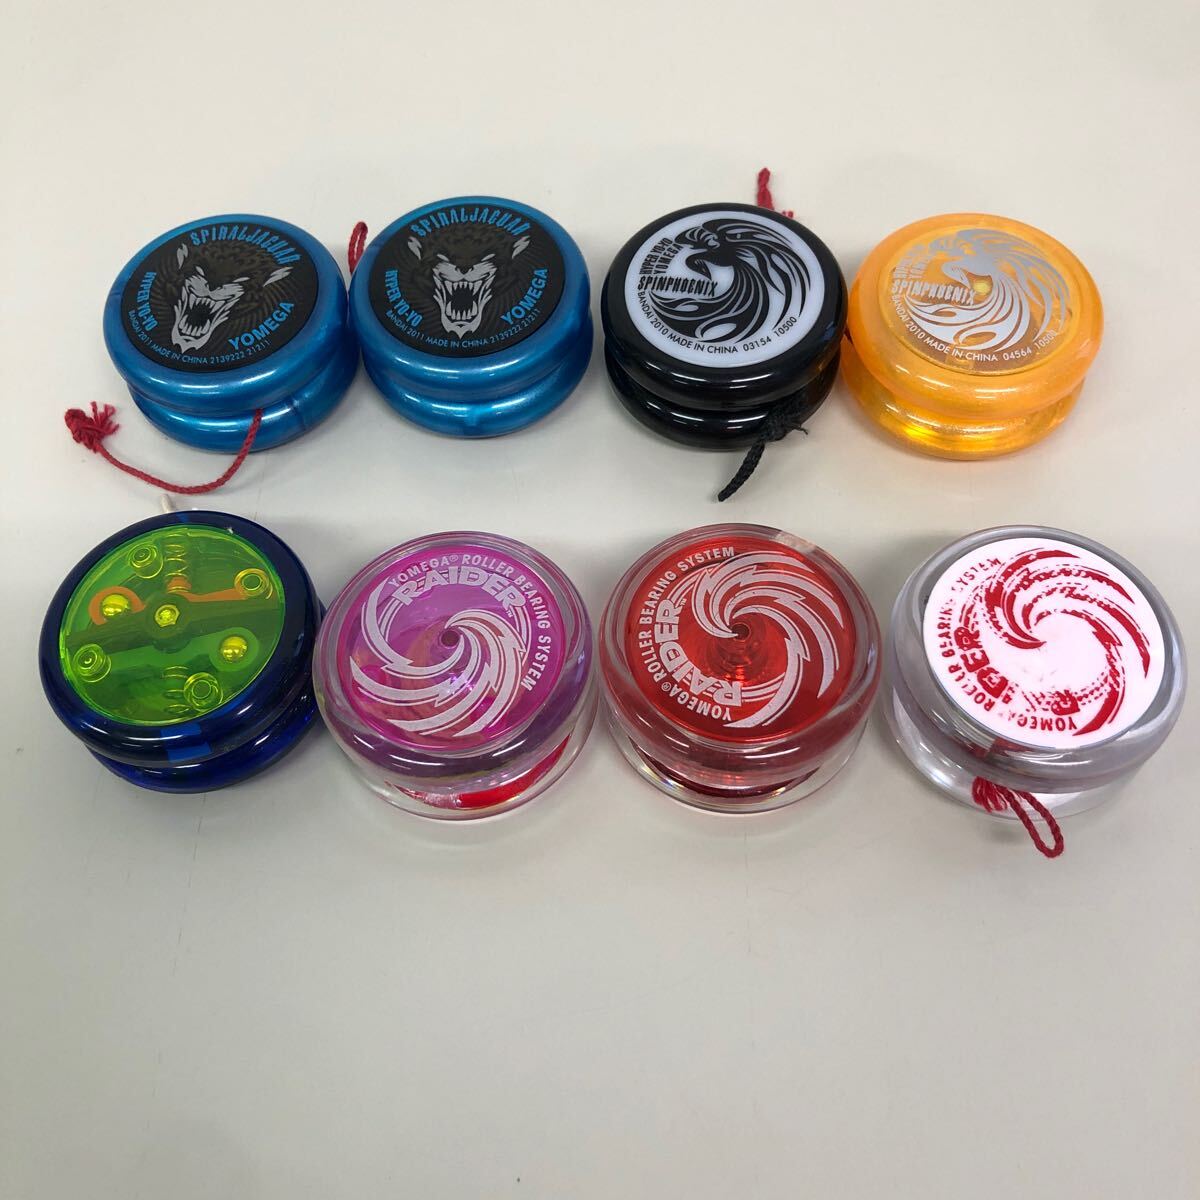  текущее состояние товар yo-yo-23 пункт гипер- yo-yo-yo mega + кейс суммировать Raider гипер- Infinity и т.п. Bandai 